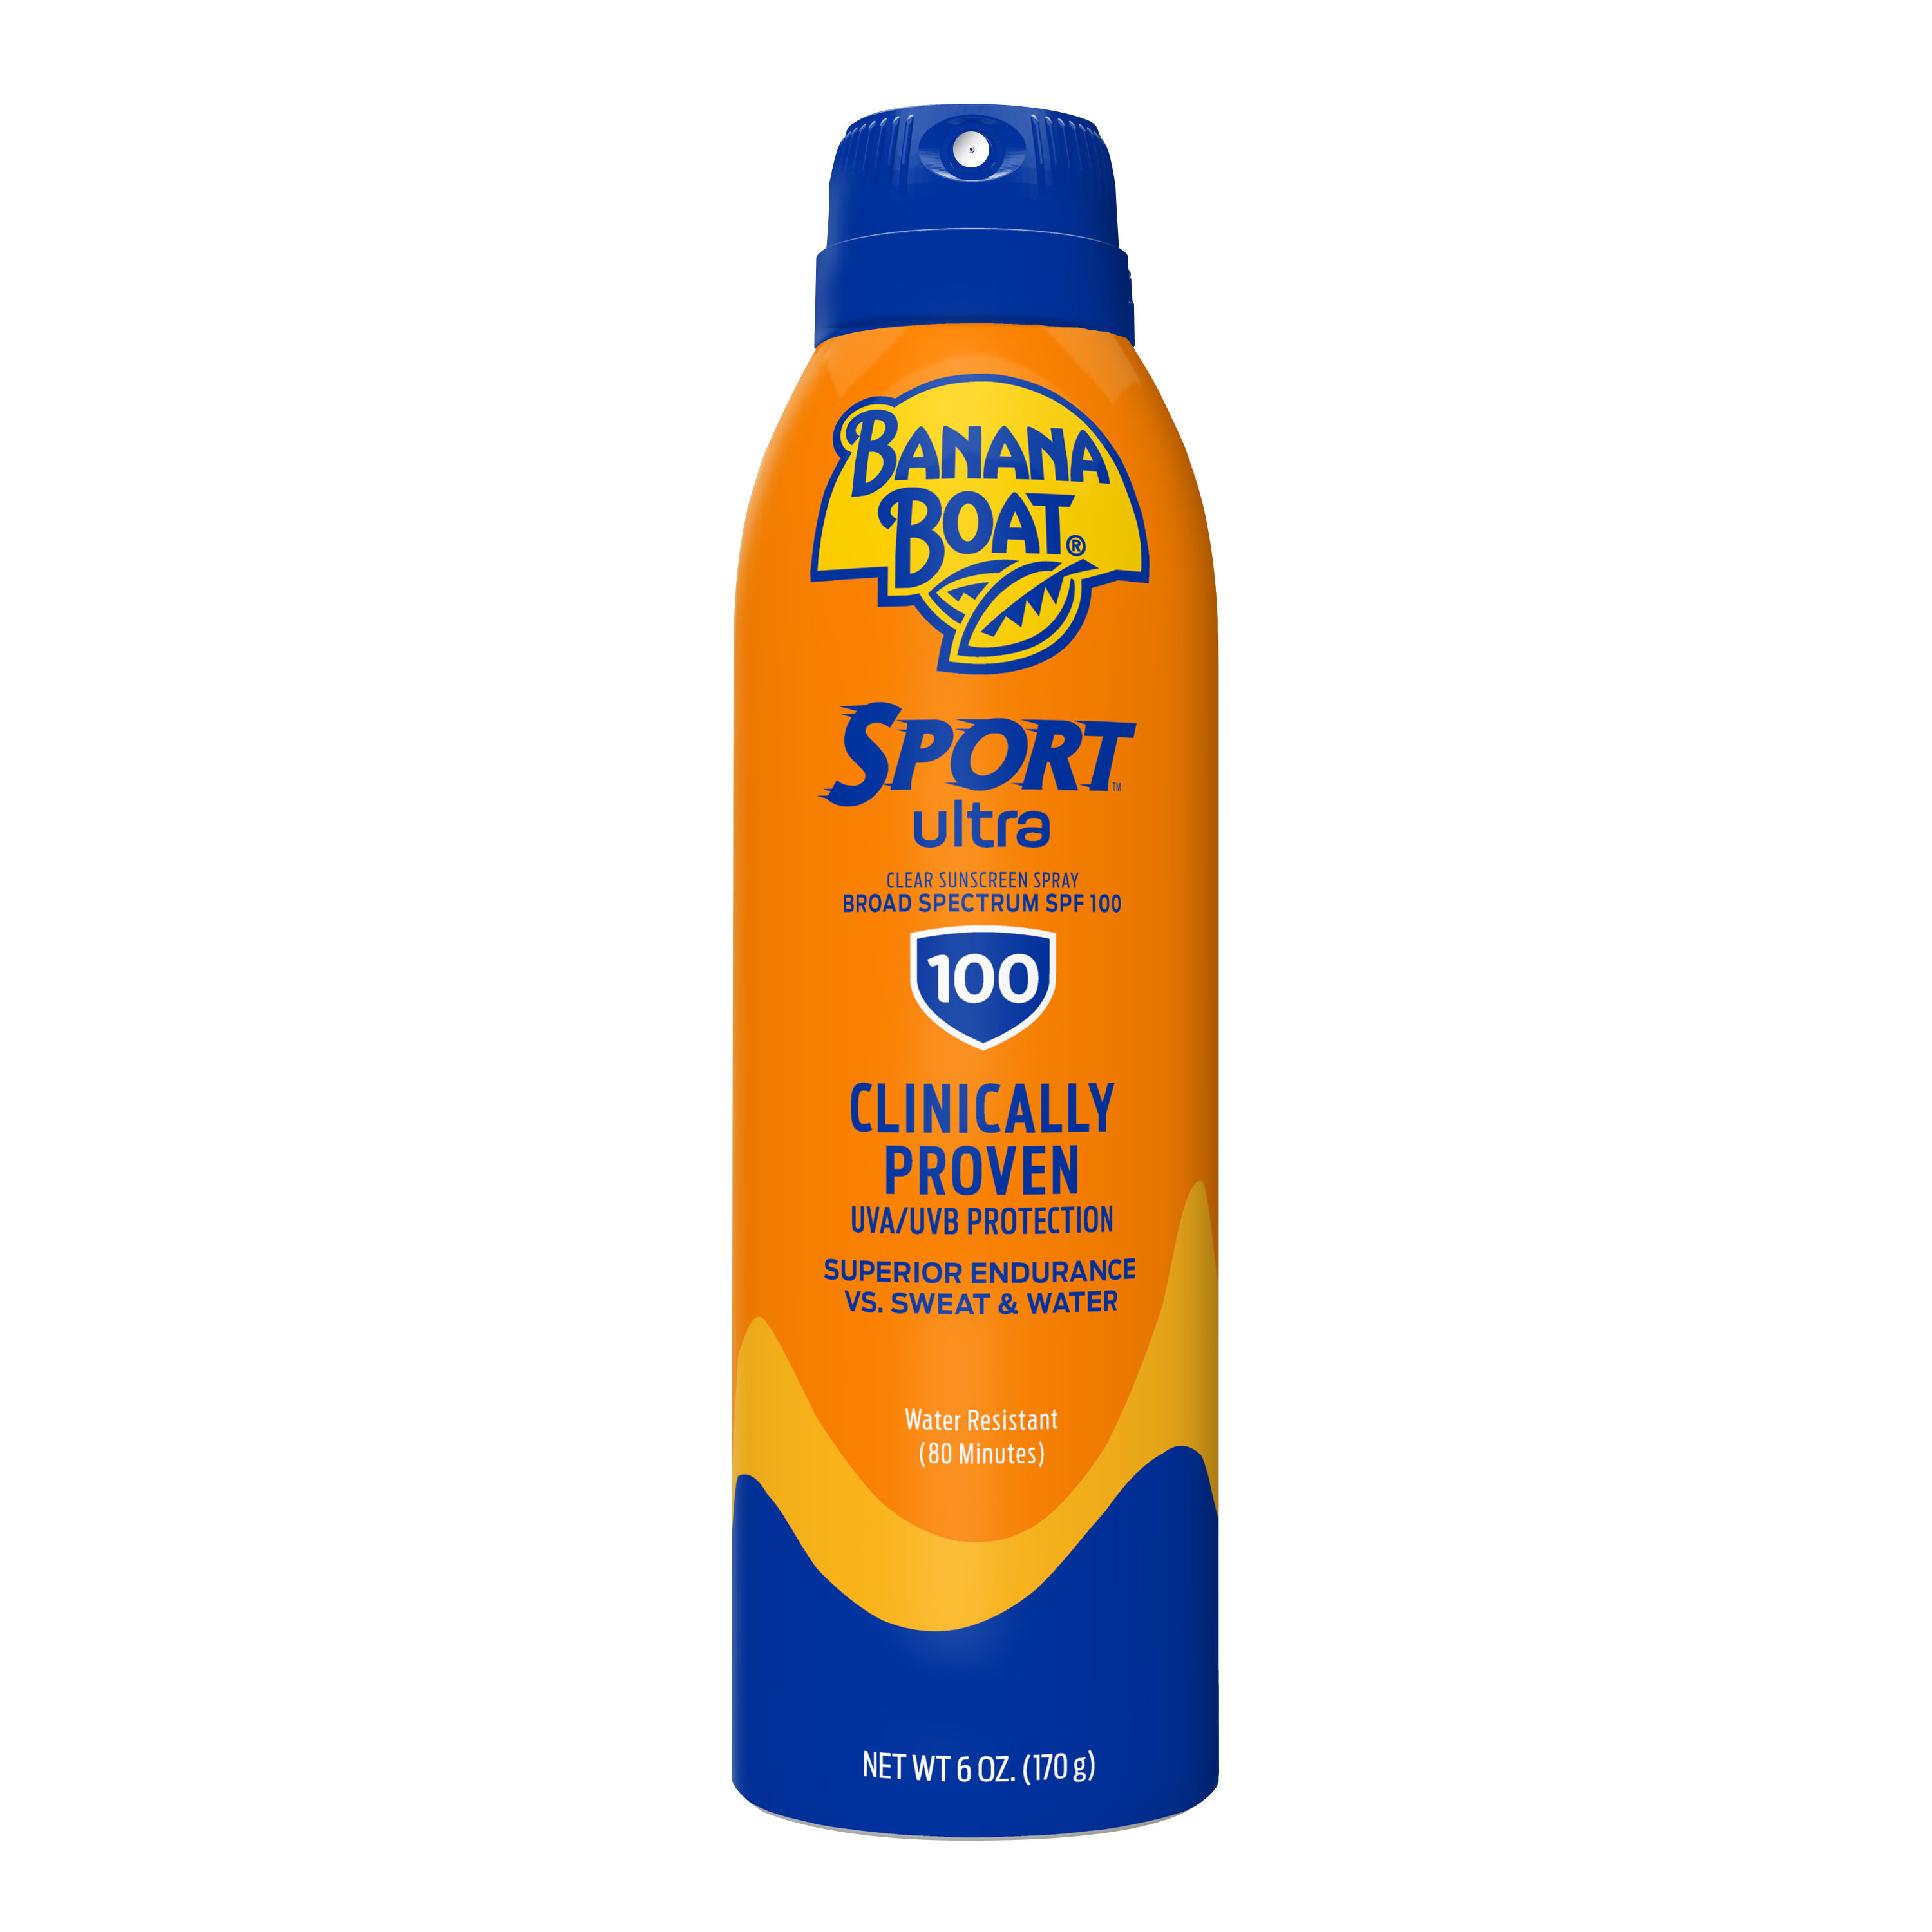 bottle of banana boat spray sunscreen